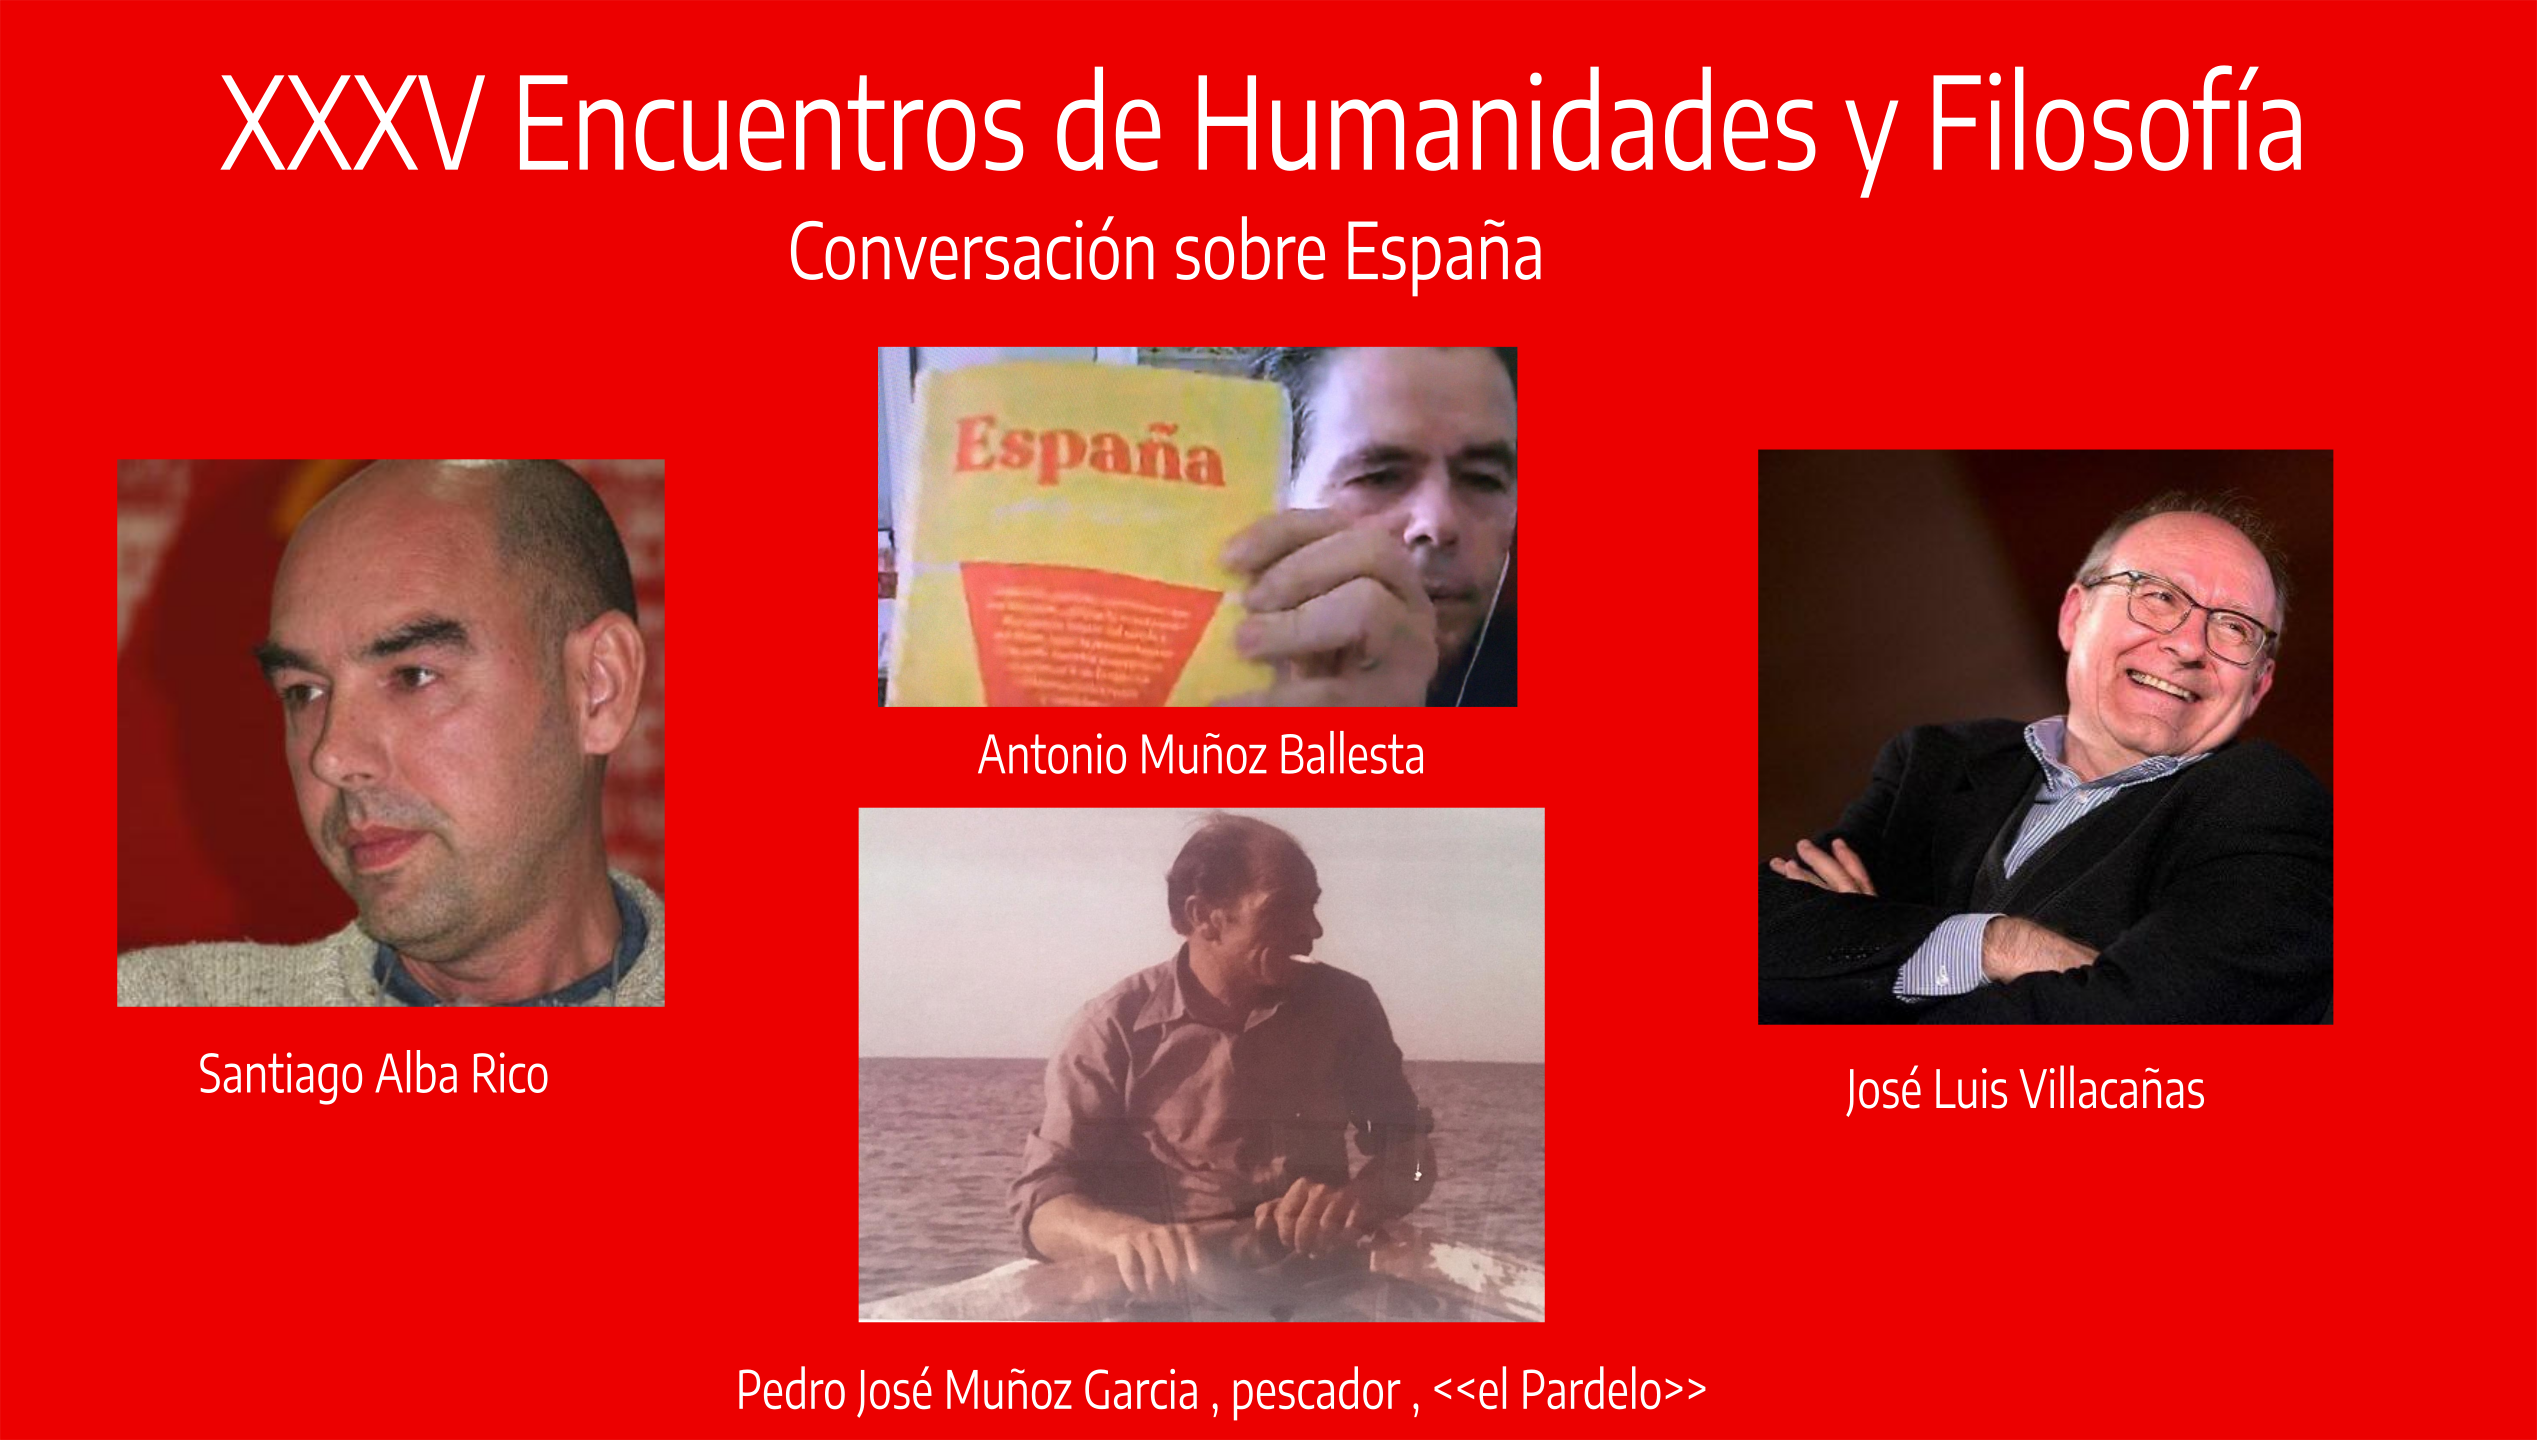 XXXV Encuentros de Humanidades y Filosfofía, Conversación sobre España .